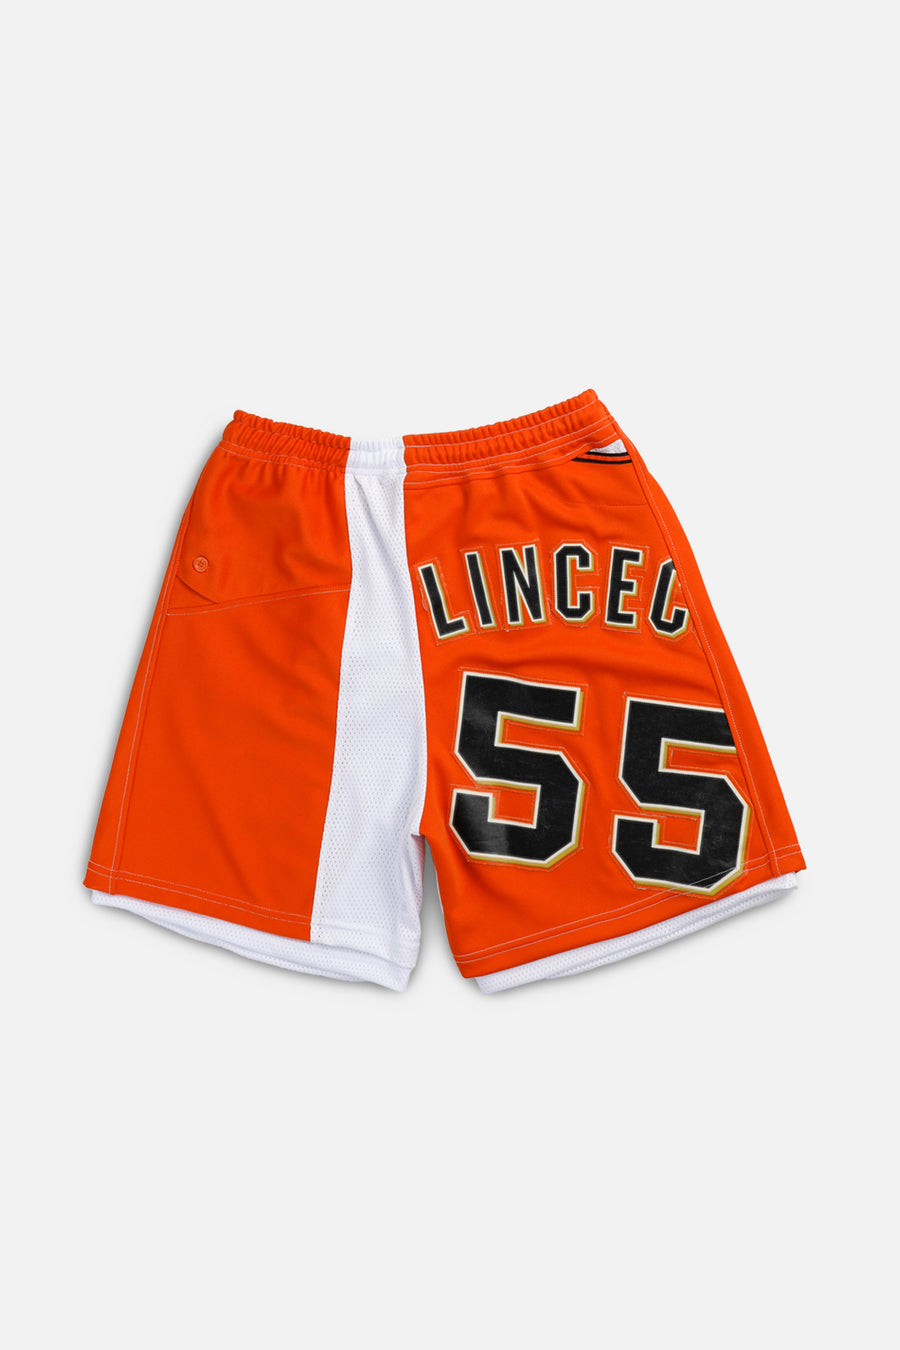 Unisex Rework San Francisco Giants MLB Jersey Shorts - L